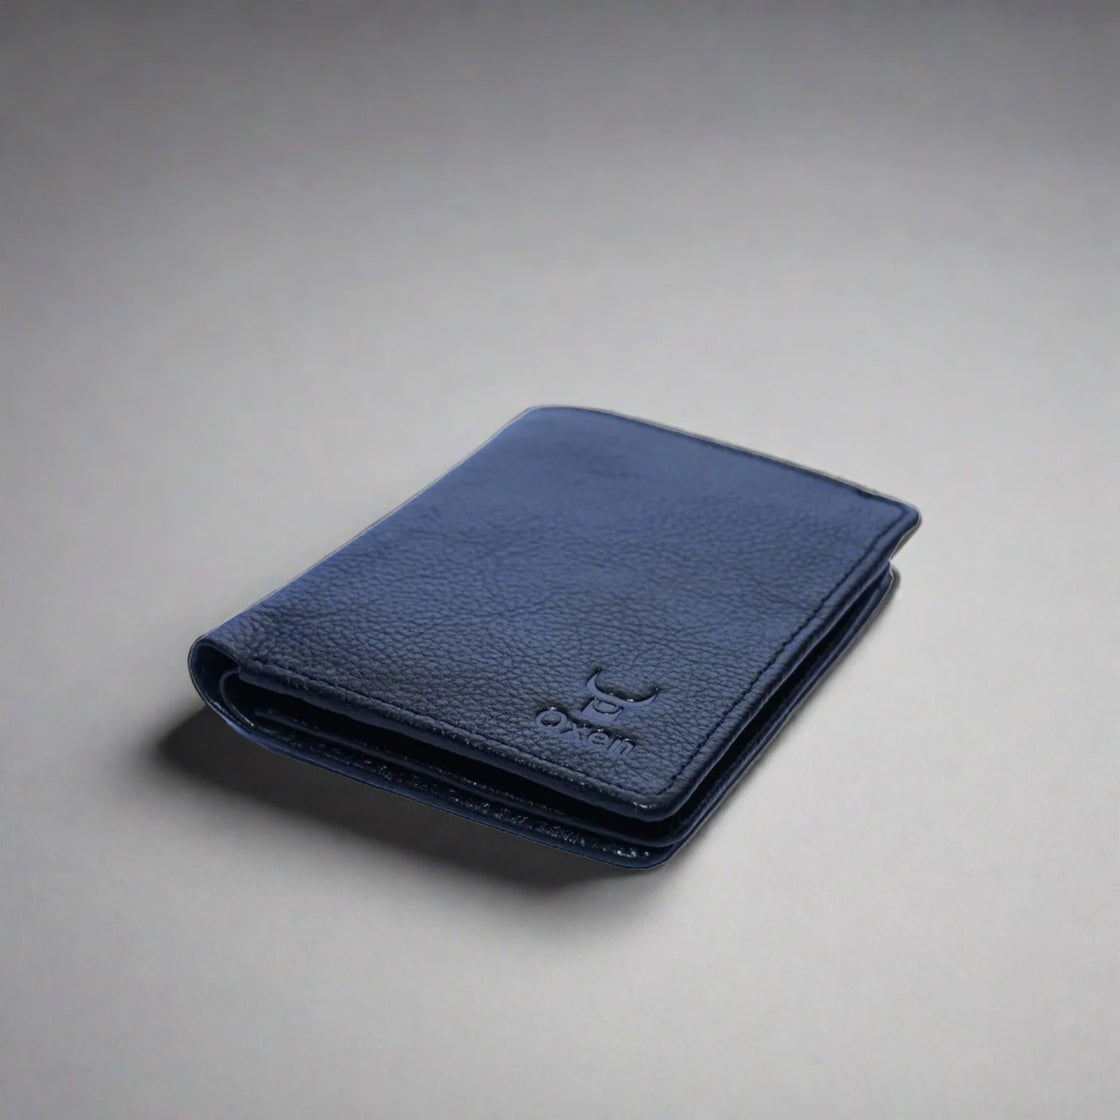 Zephyr Leather Wallet